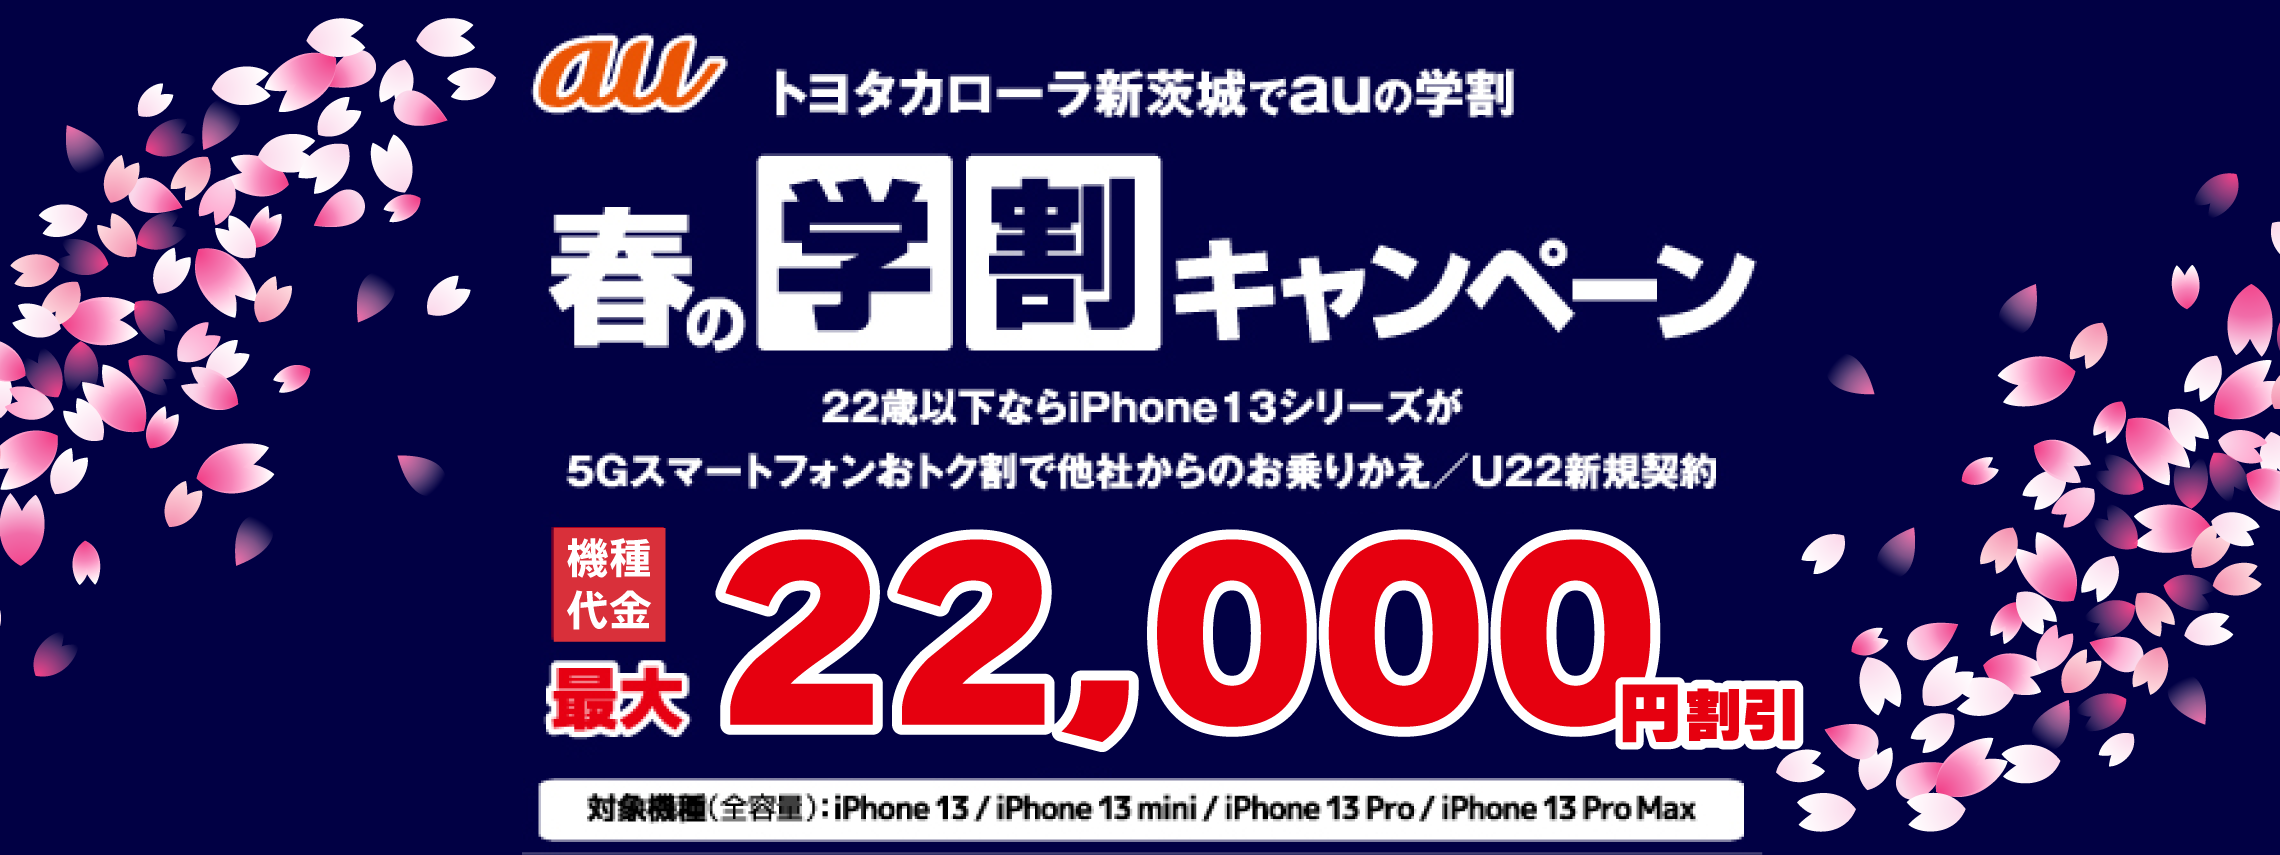 U22 iPhone割引キャンペーン②